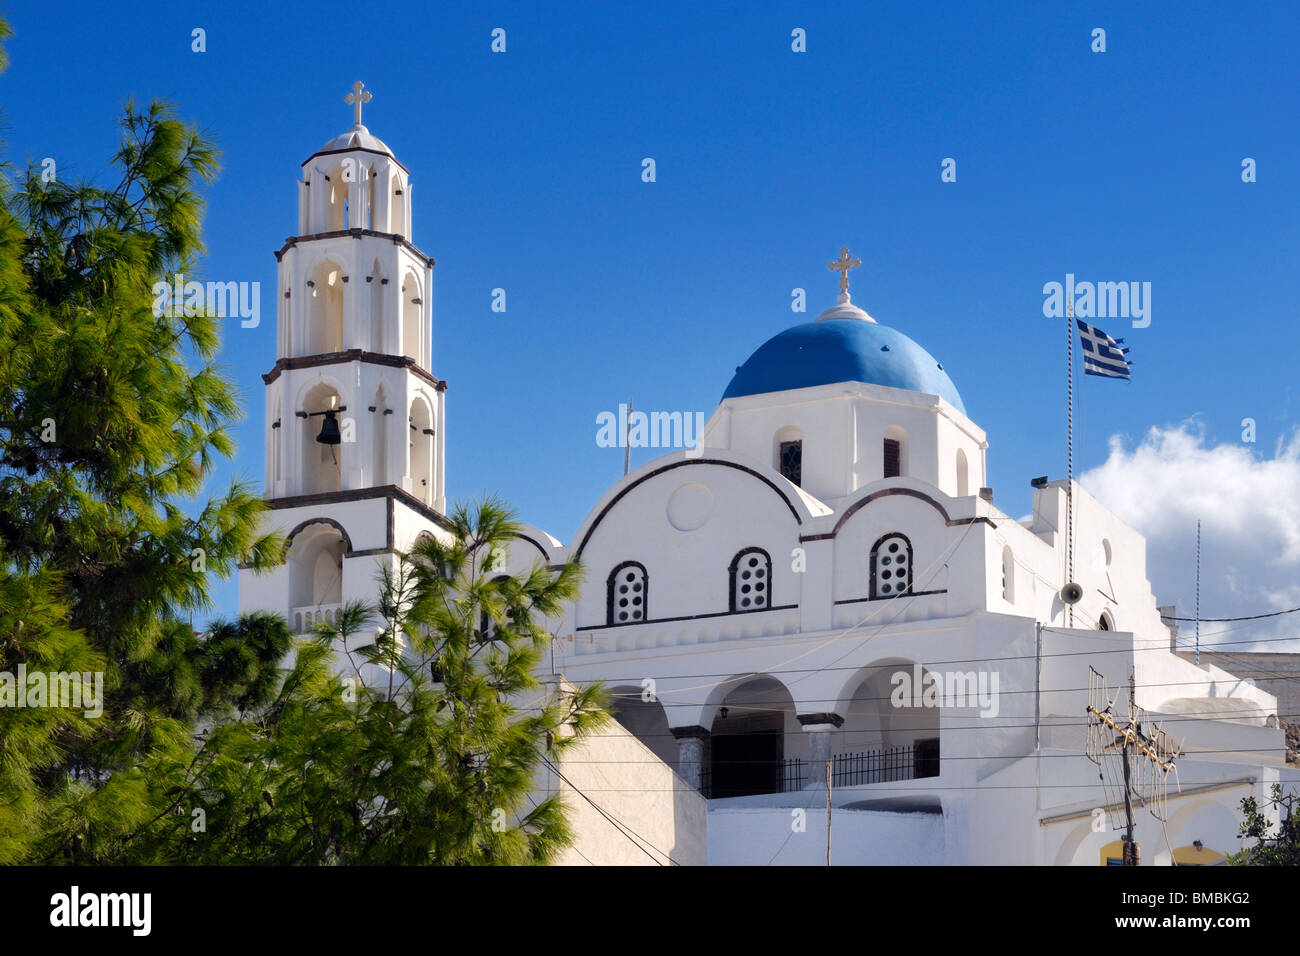 The church of Agios Nikolaos in the town of Pyrgos (Pirgos) on Santorini Island, Greece. Stock Photo